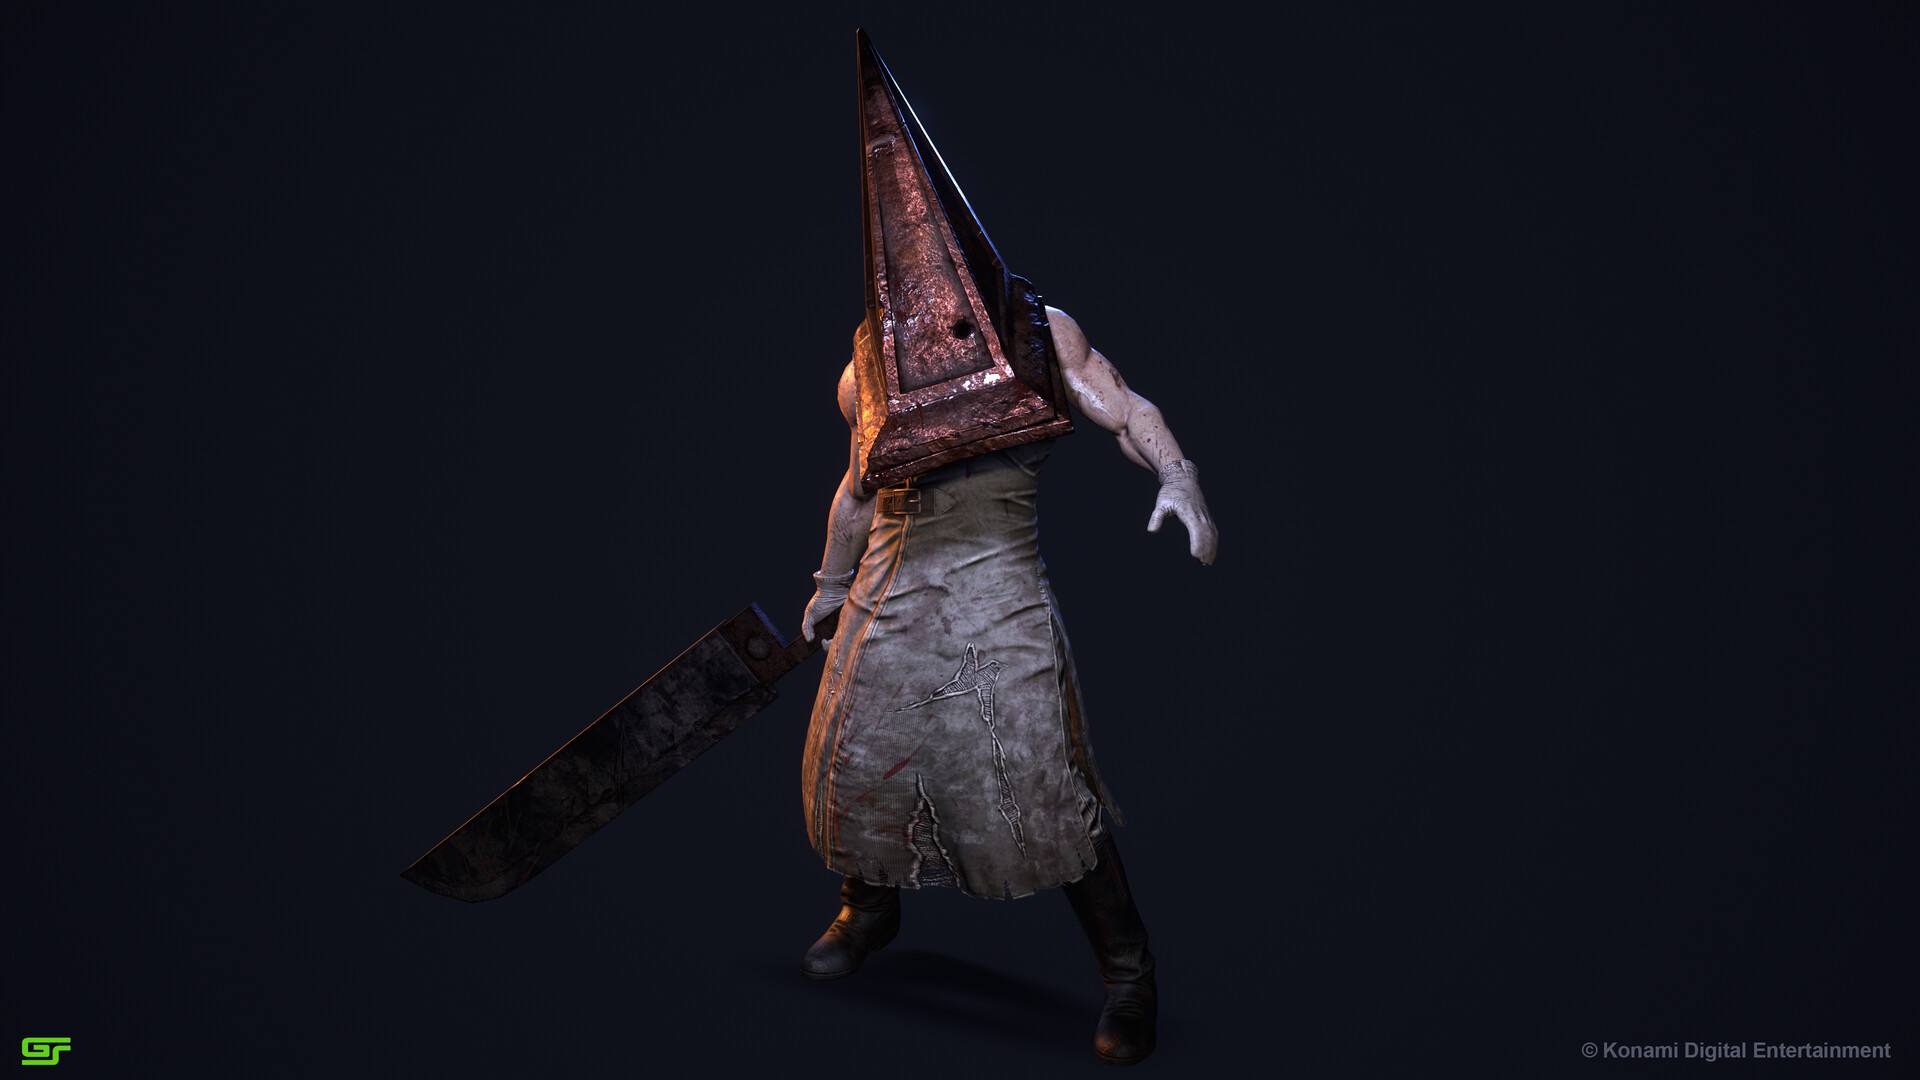 Mr Pyramid Head image - SILENT HILL 2.2. mod for Unreal Tournament 3 - ModDB